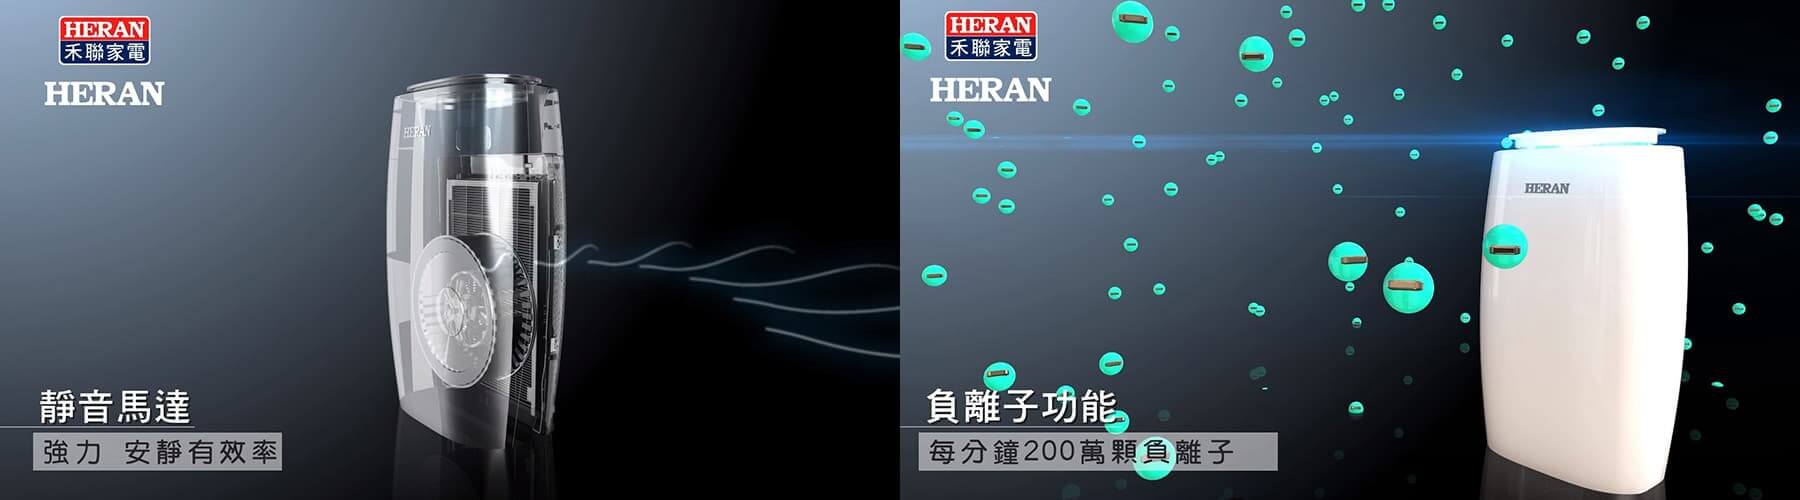 HERAN空氣清淨機 3D動畫影片-1